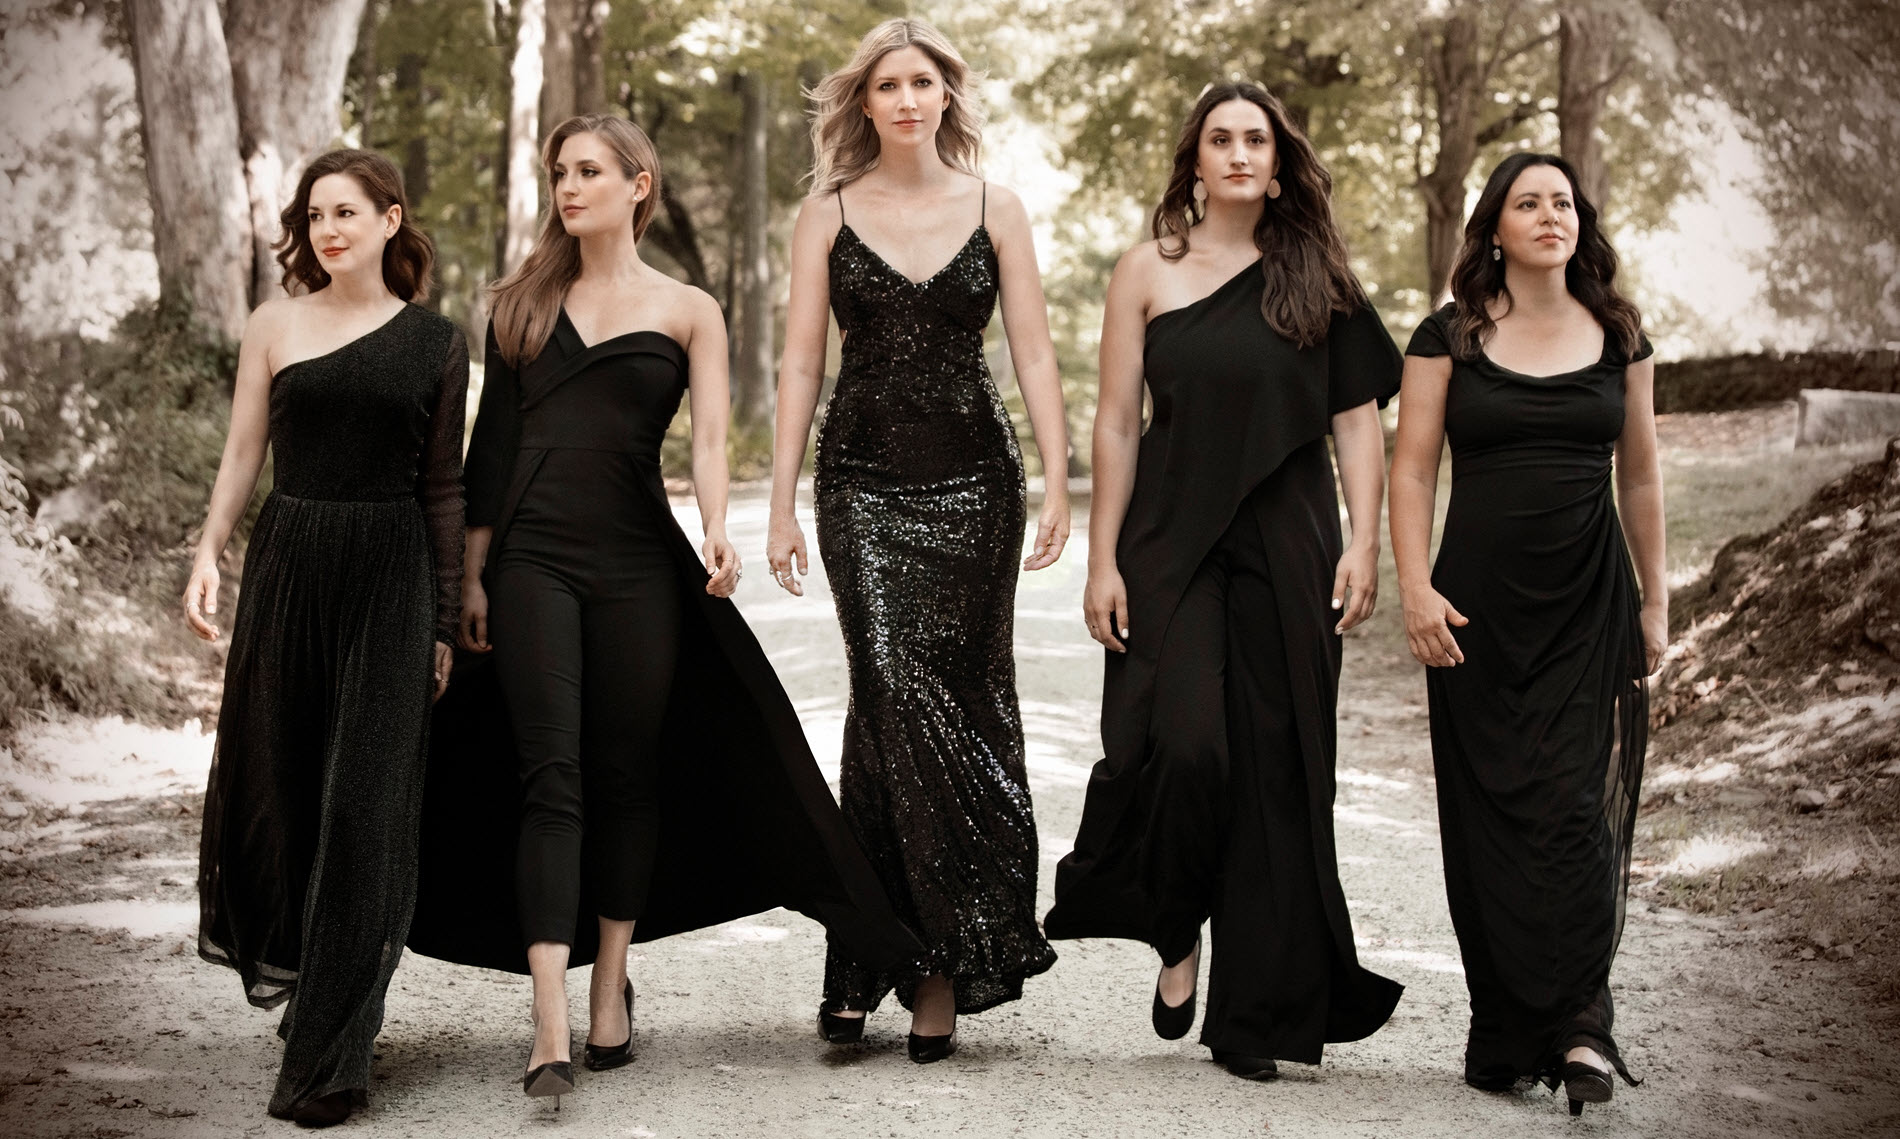 Five women in ballgowns walking down a path.